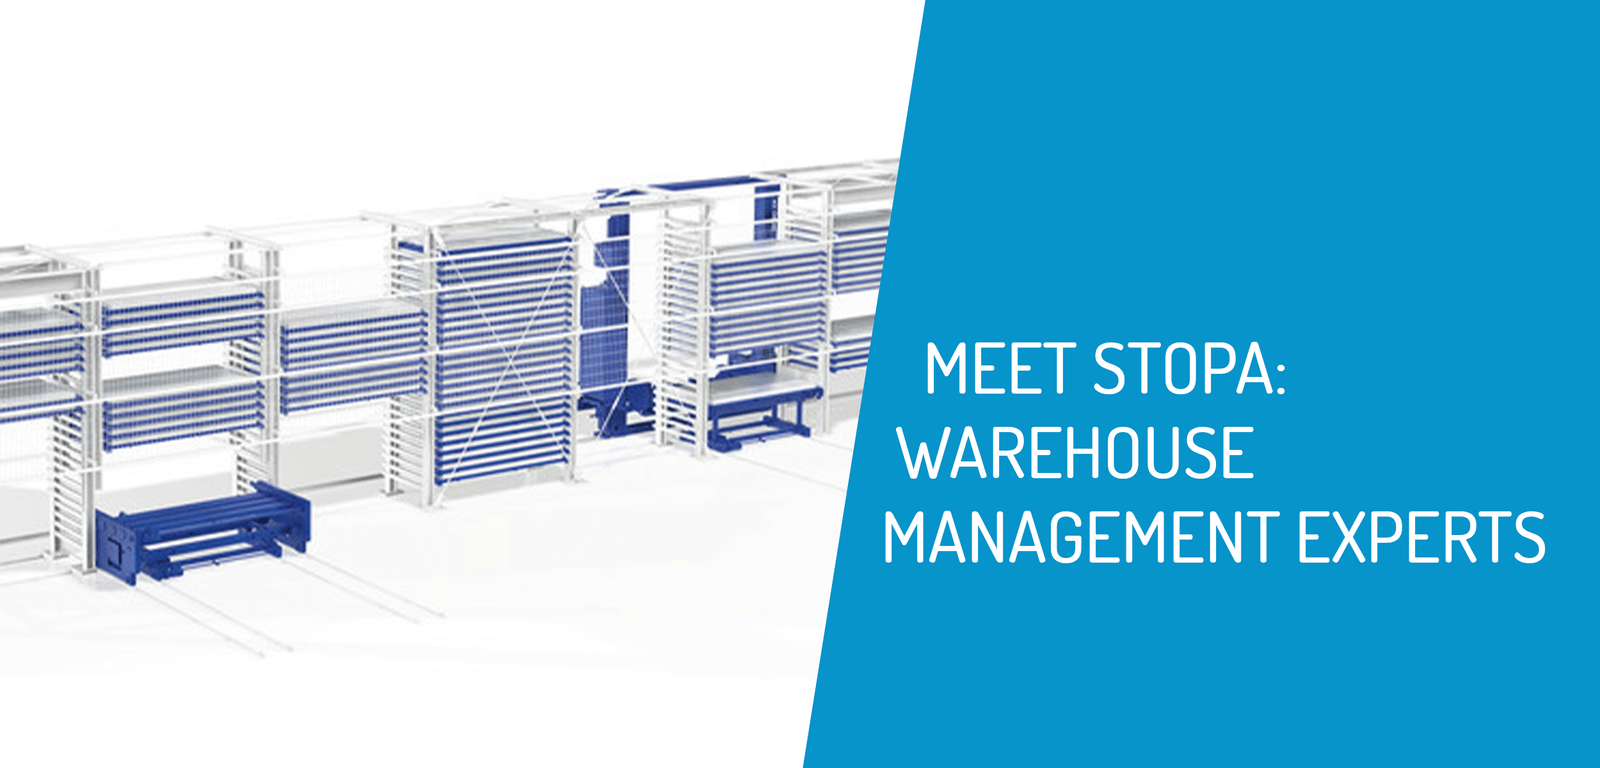 Meet Stopa: Warehouse Management Experts